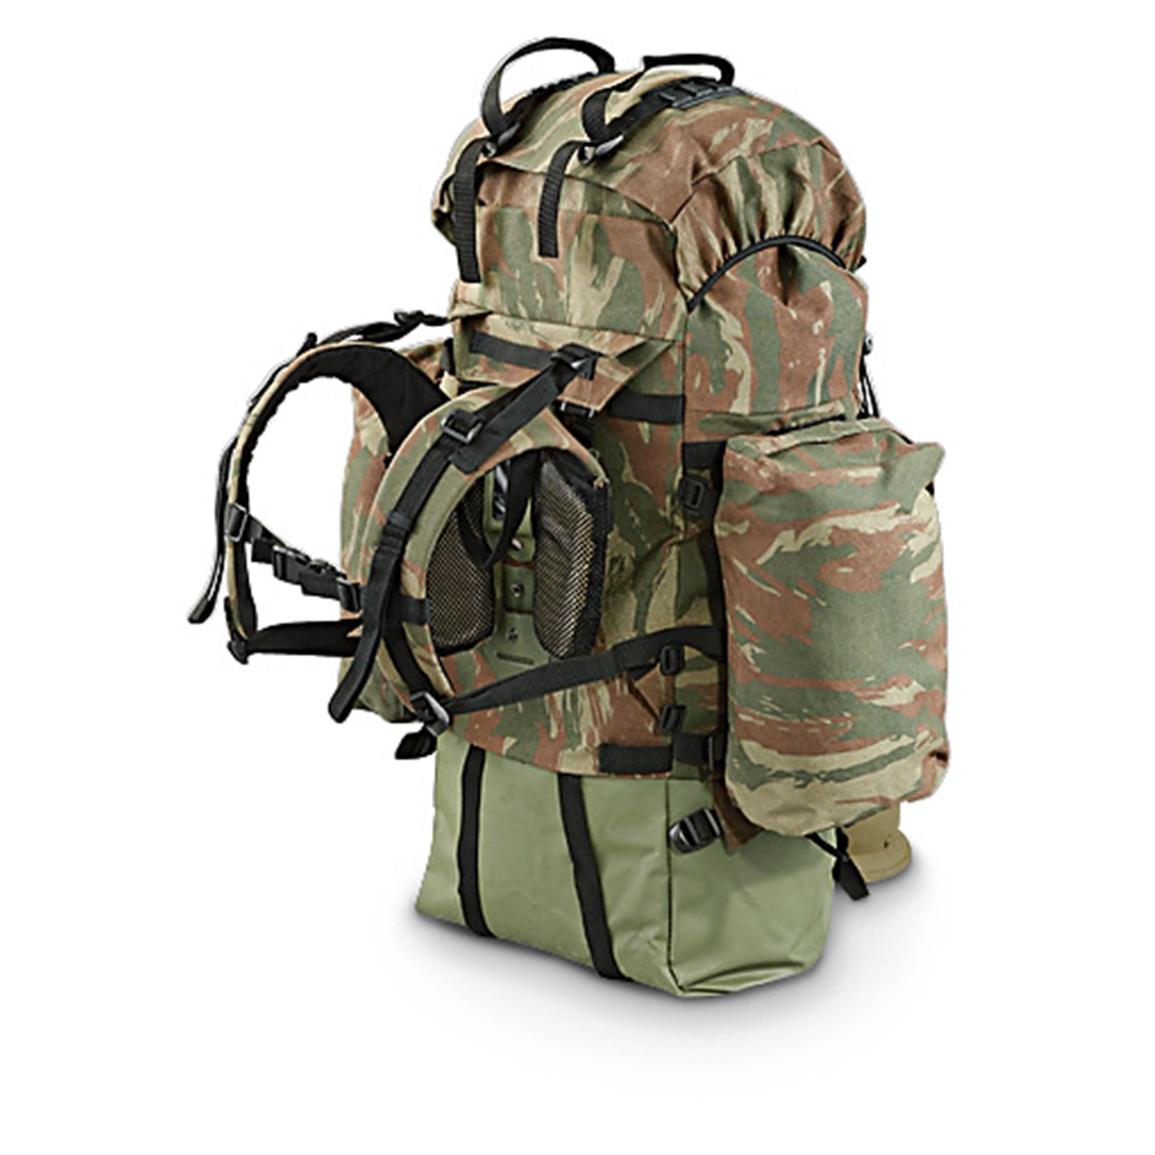 Extra-large Military-style Rucksack, Mediterranean Camo - 301106, Rucksacks & Backpacks at ...